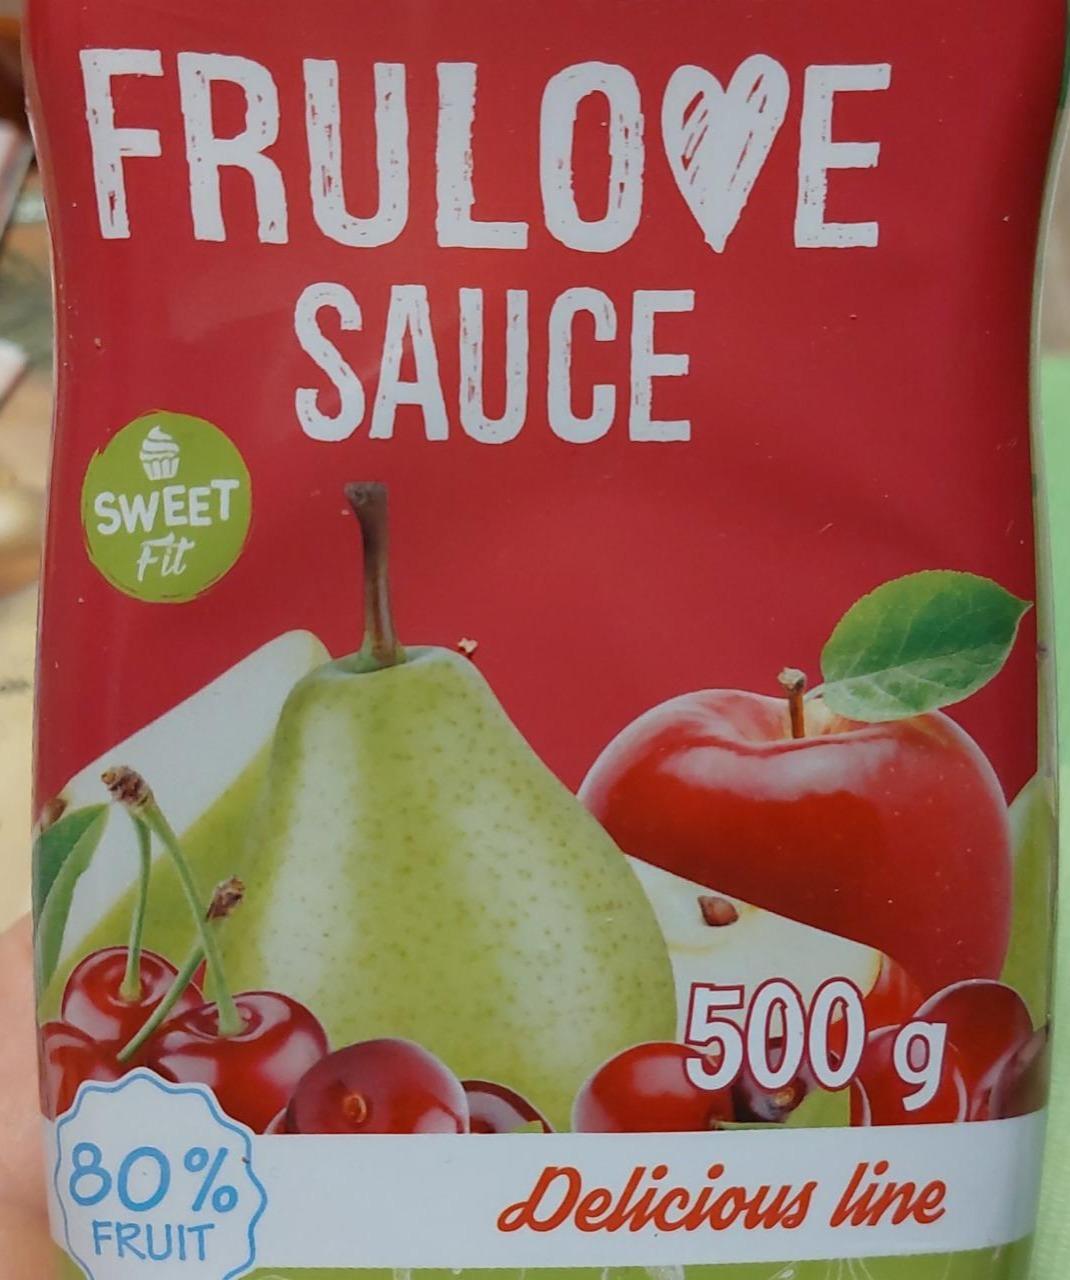 Fotografie - Frulove sauce pear-cherry-apple